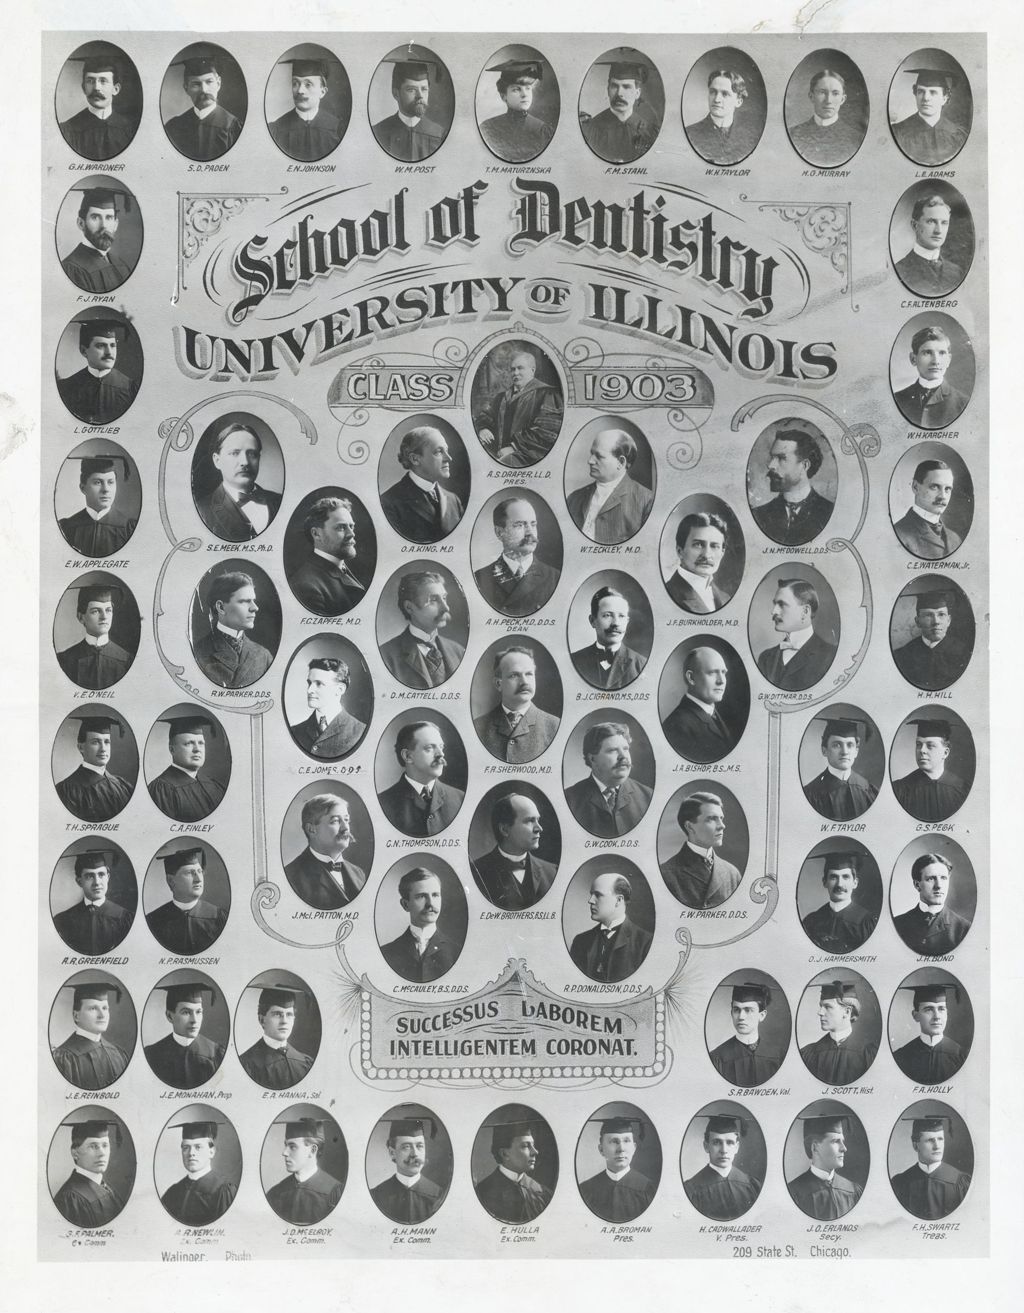 Miniature of 1903 graduating class, University of Illinois College of Dentistry